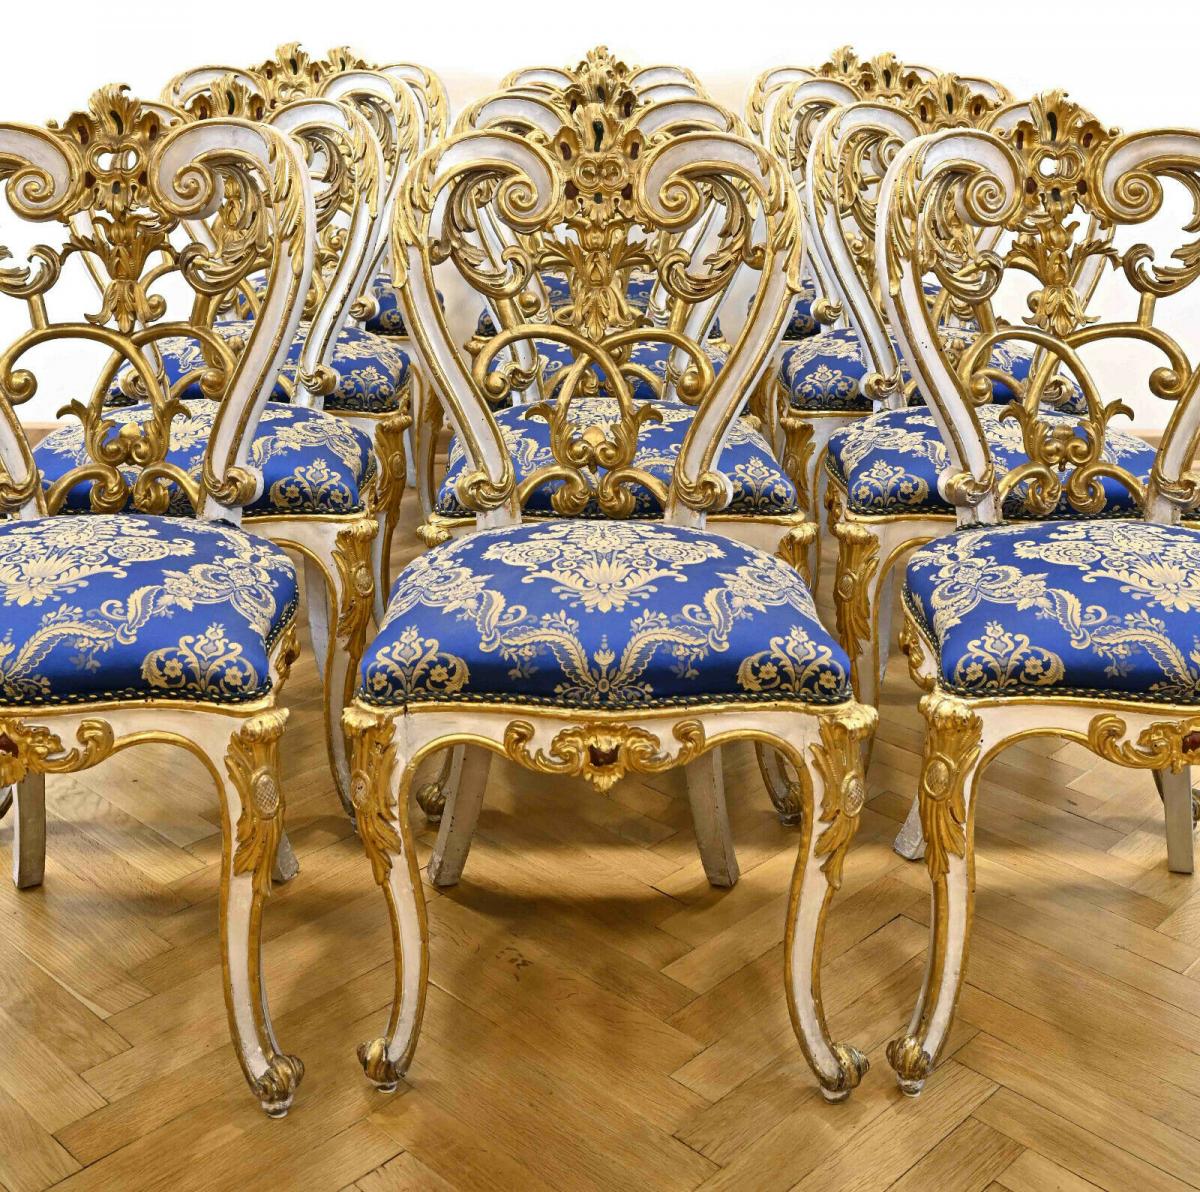 12er Stuhlsatz aus dem 19 Jahrhundert in königlicher AusstrahlungAntik Kolosseum 10